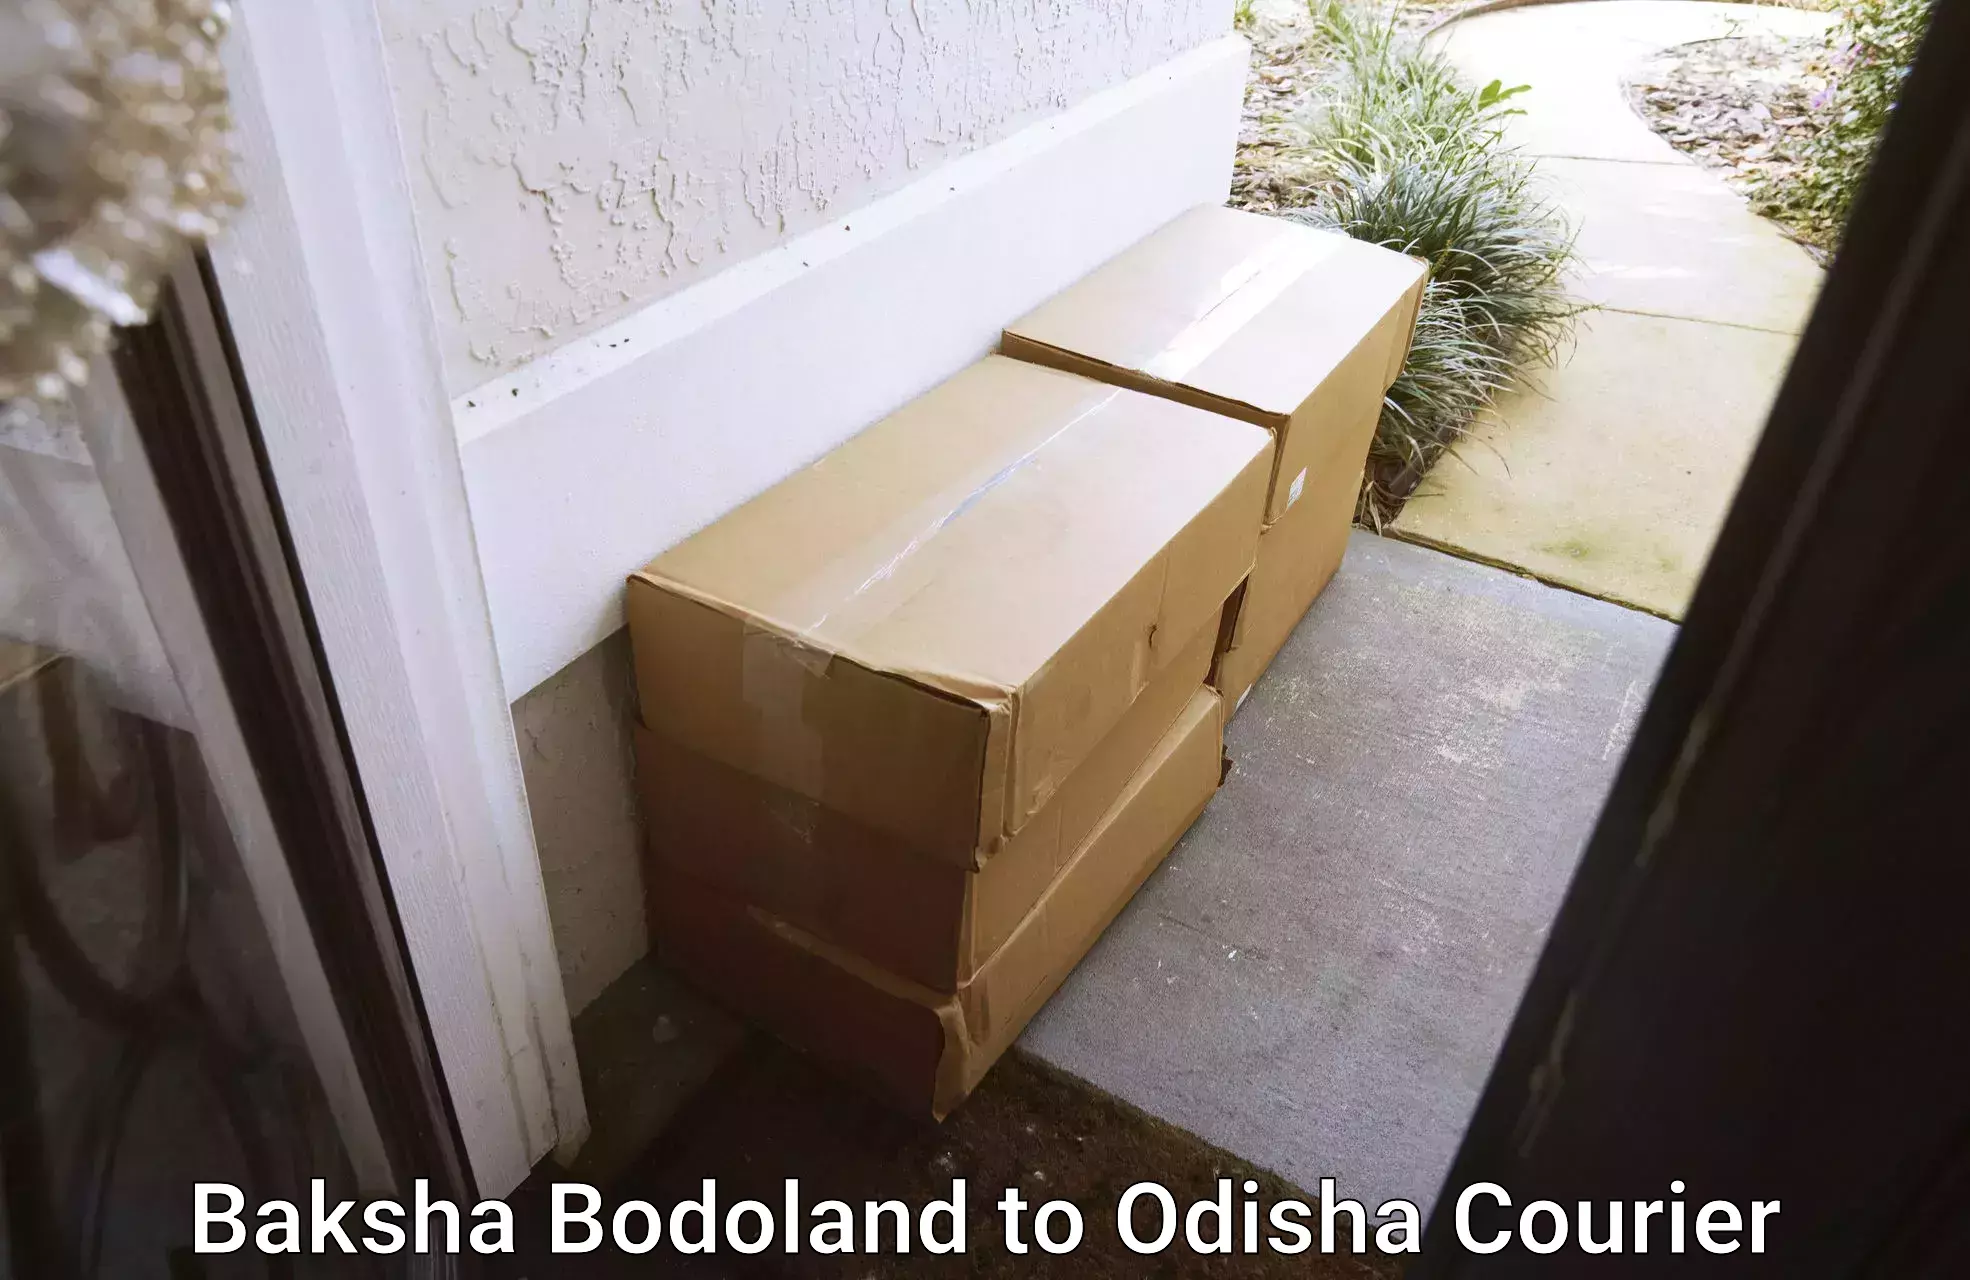 High value parcel delivery in Baksha Bodoland to Bhadrak